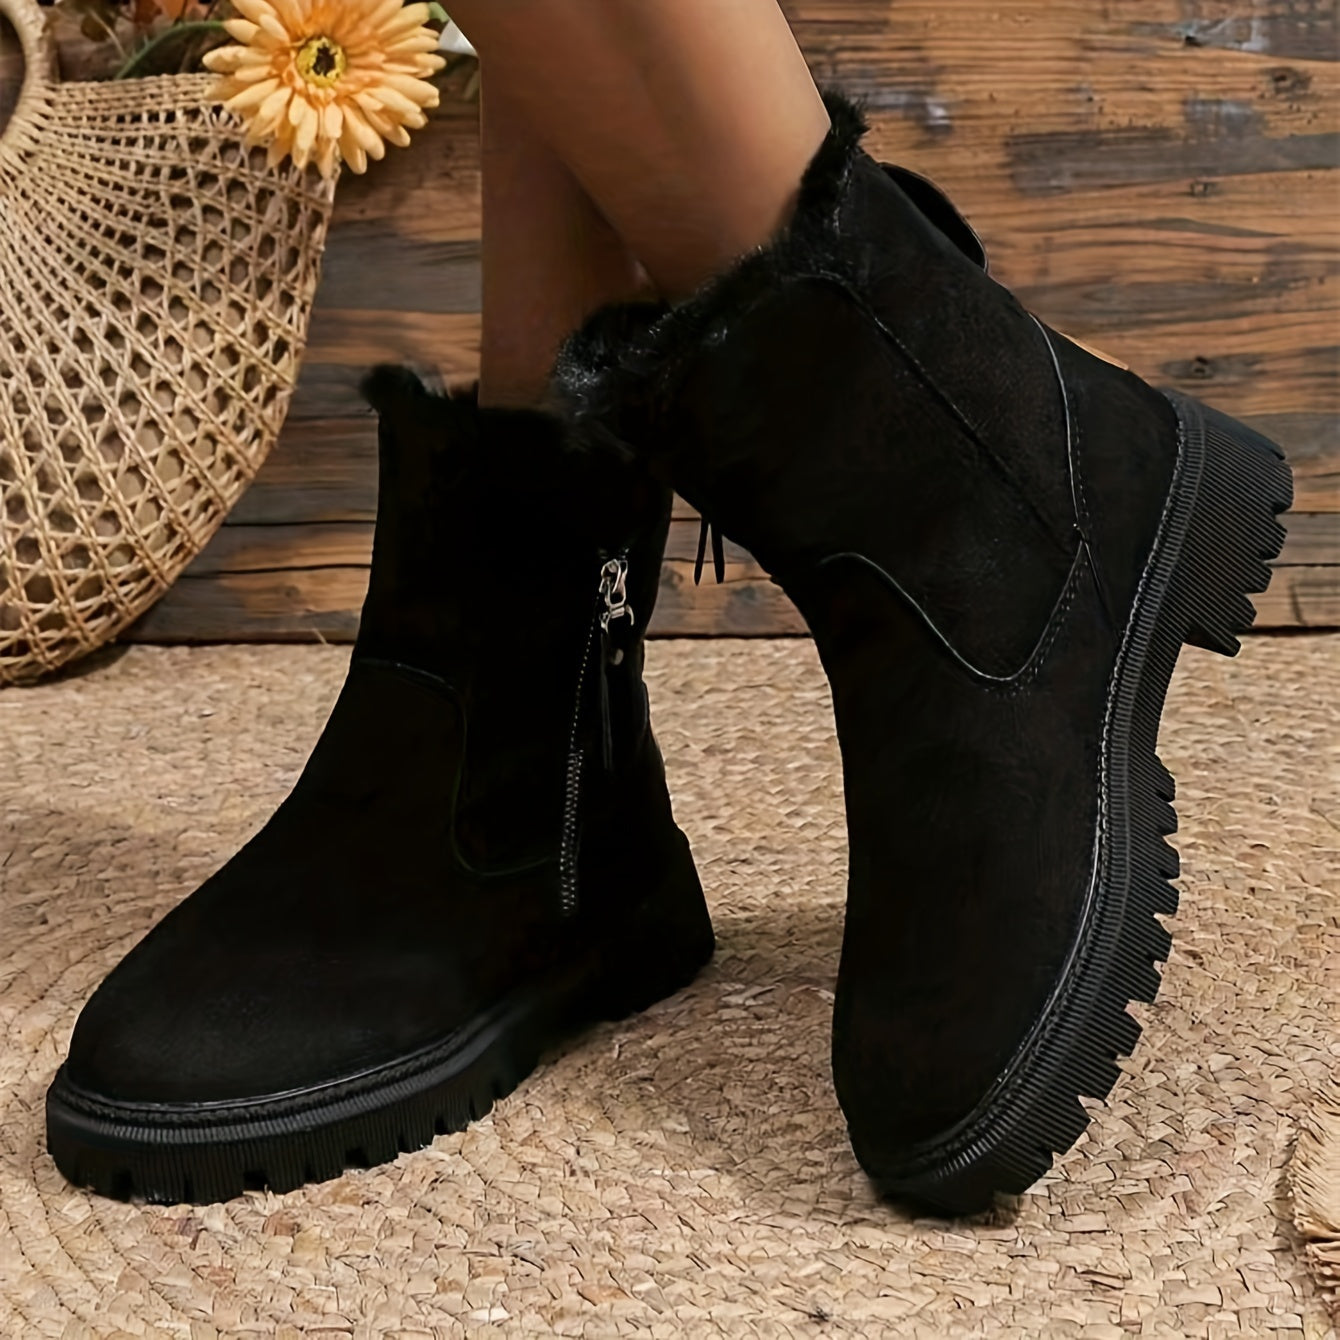 Elegant winter style | Comfortable boots